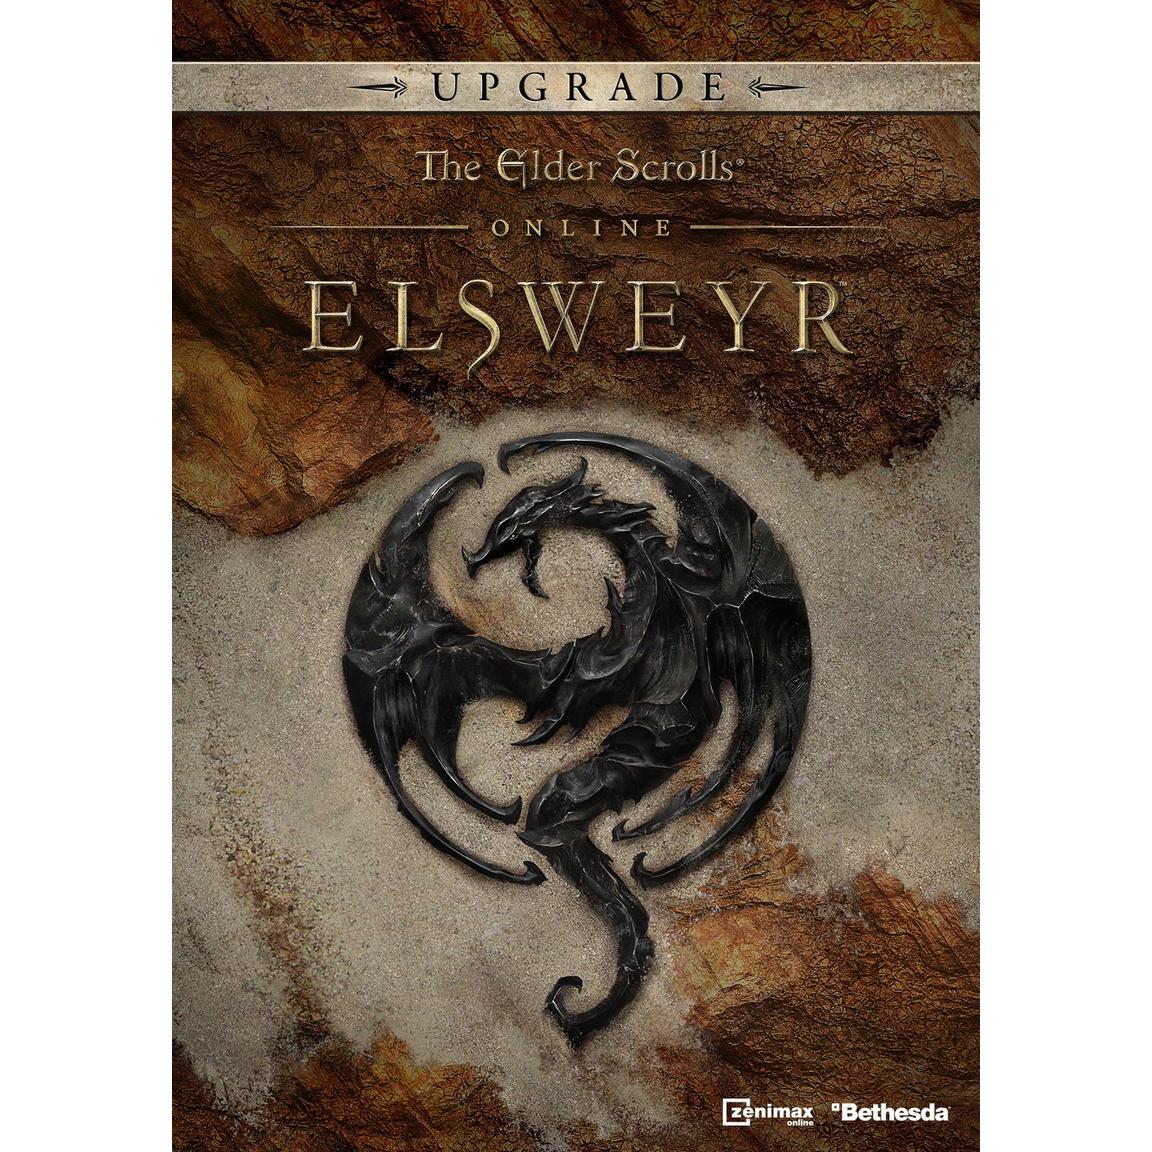 The Elder Scrolls Online: Elsweyr Upgrade - PC, Digital